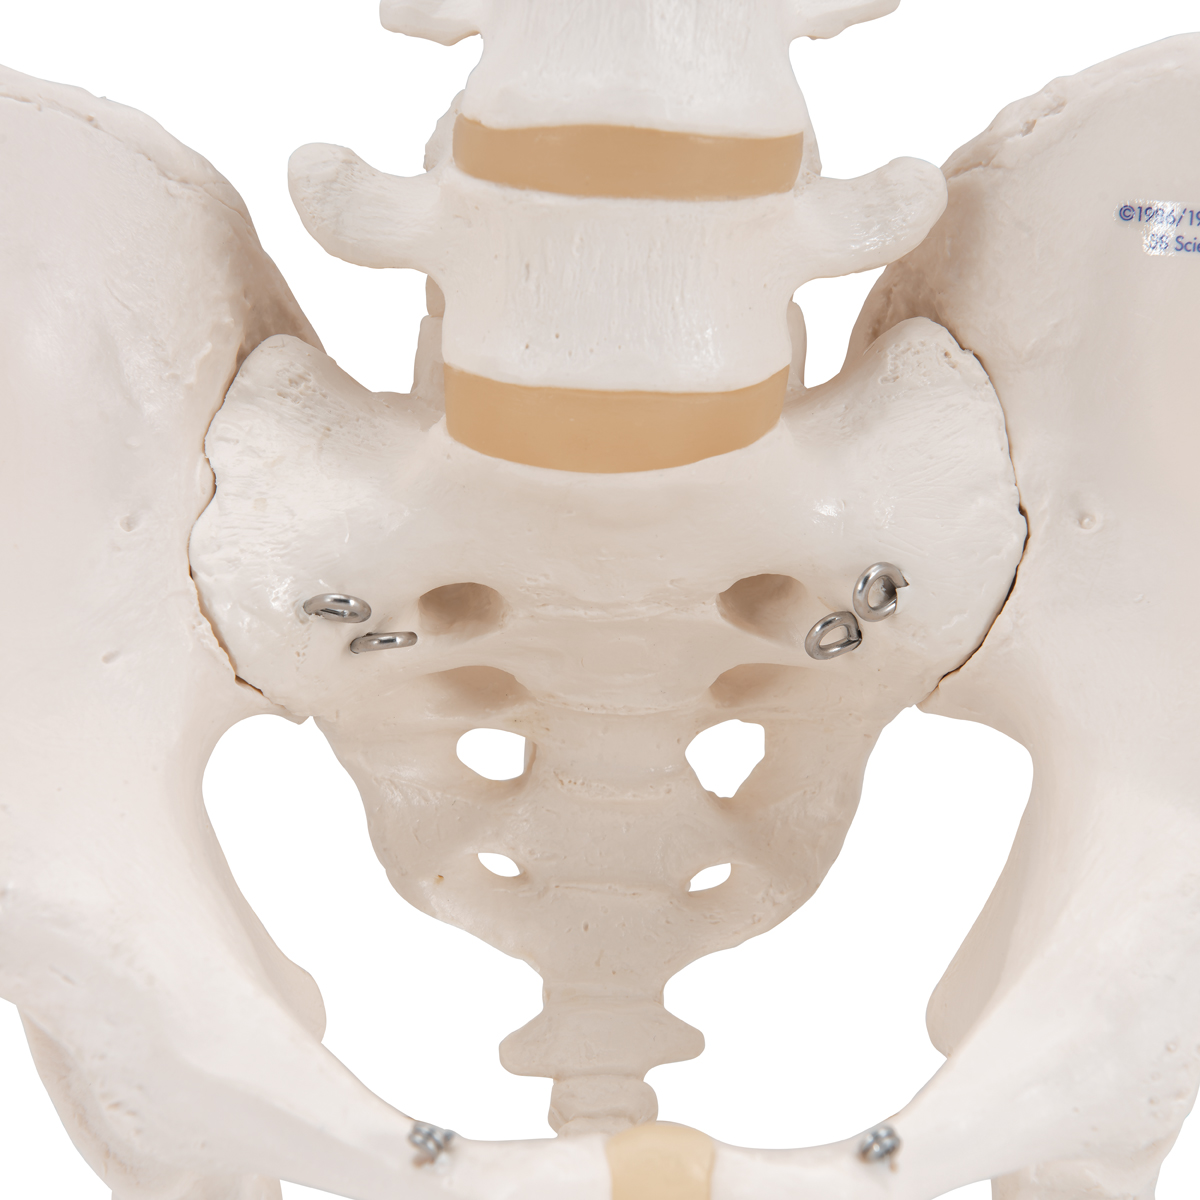 Squelette du bassin masculin, Anatomie